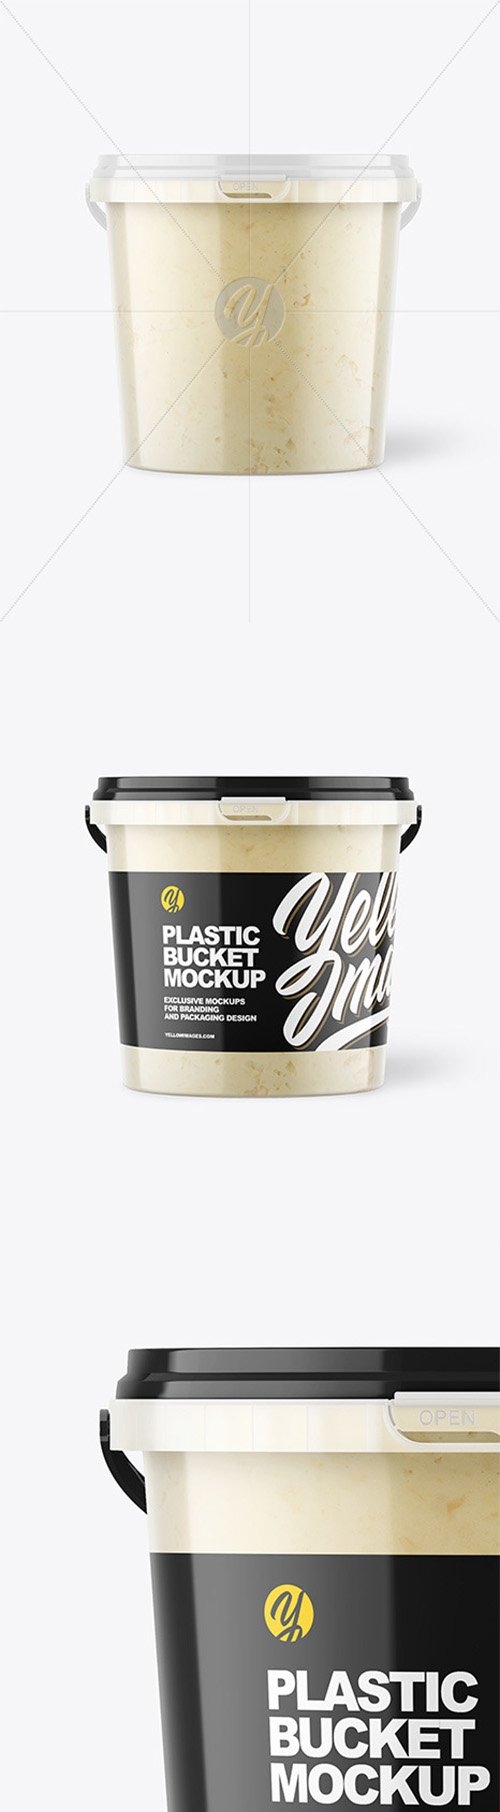 Plastic Bucket with Sauce Mockup 66579